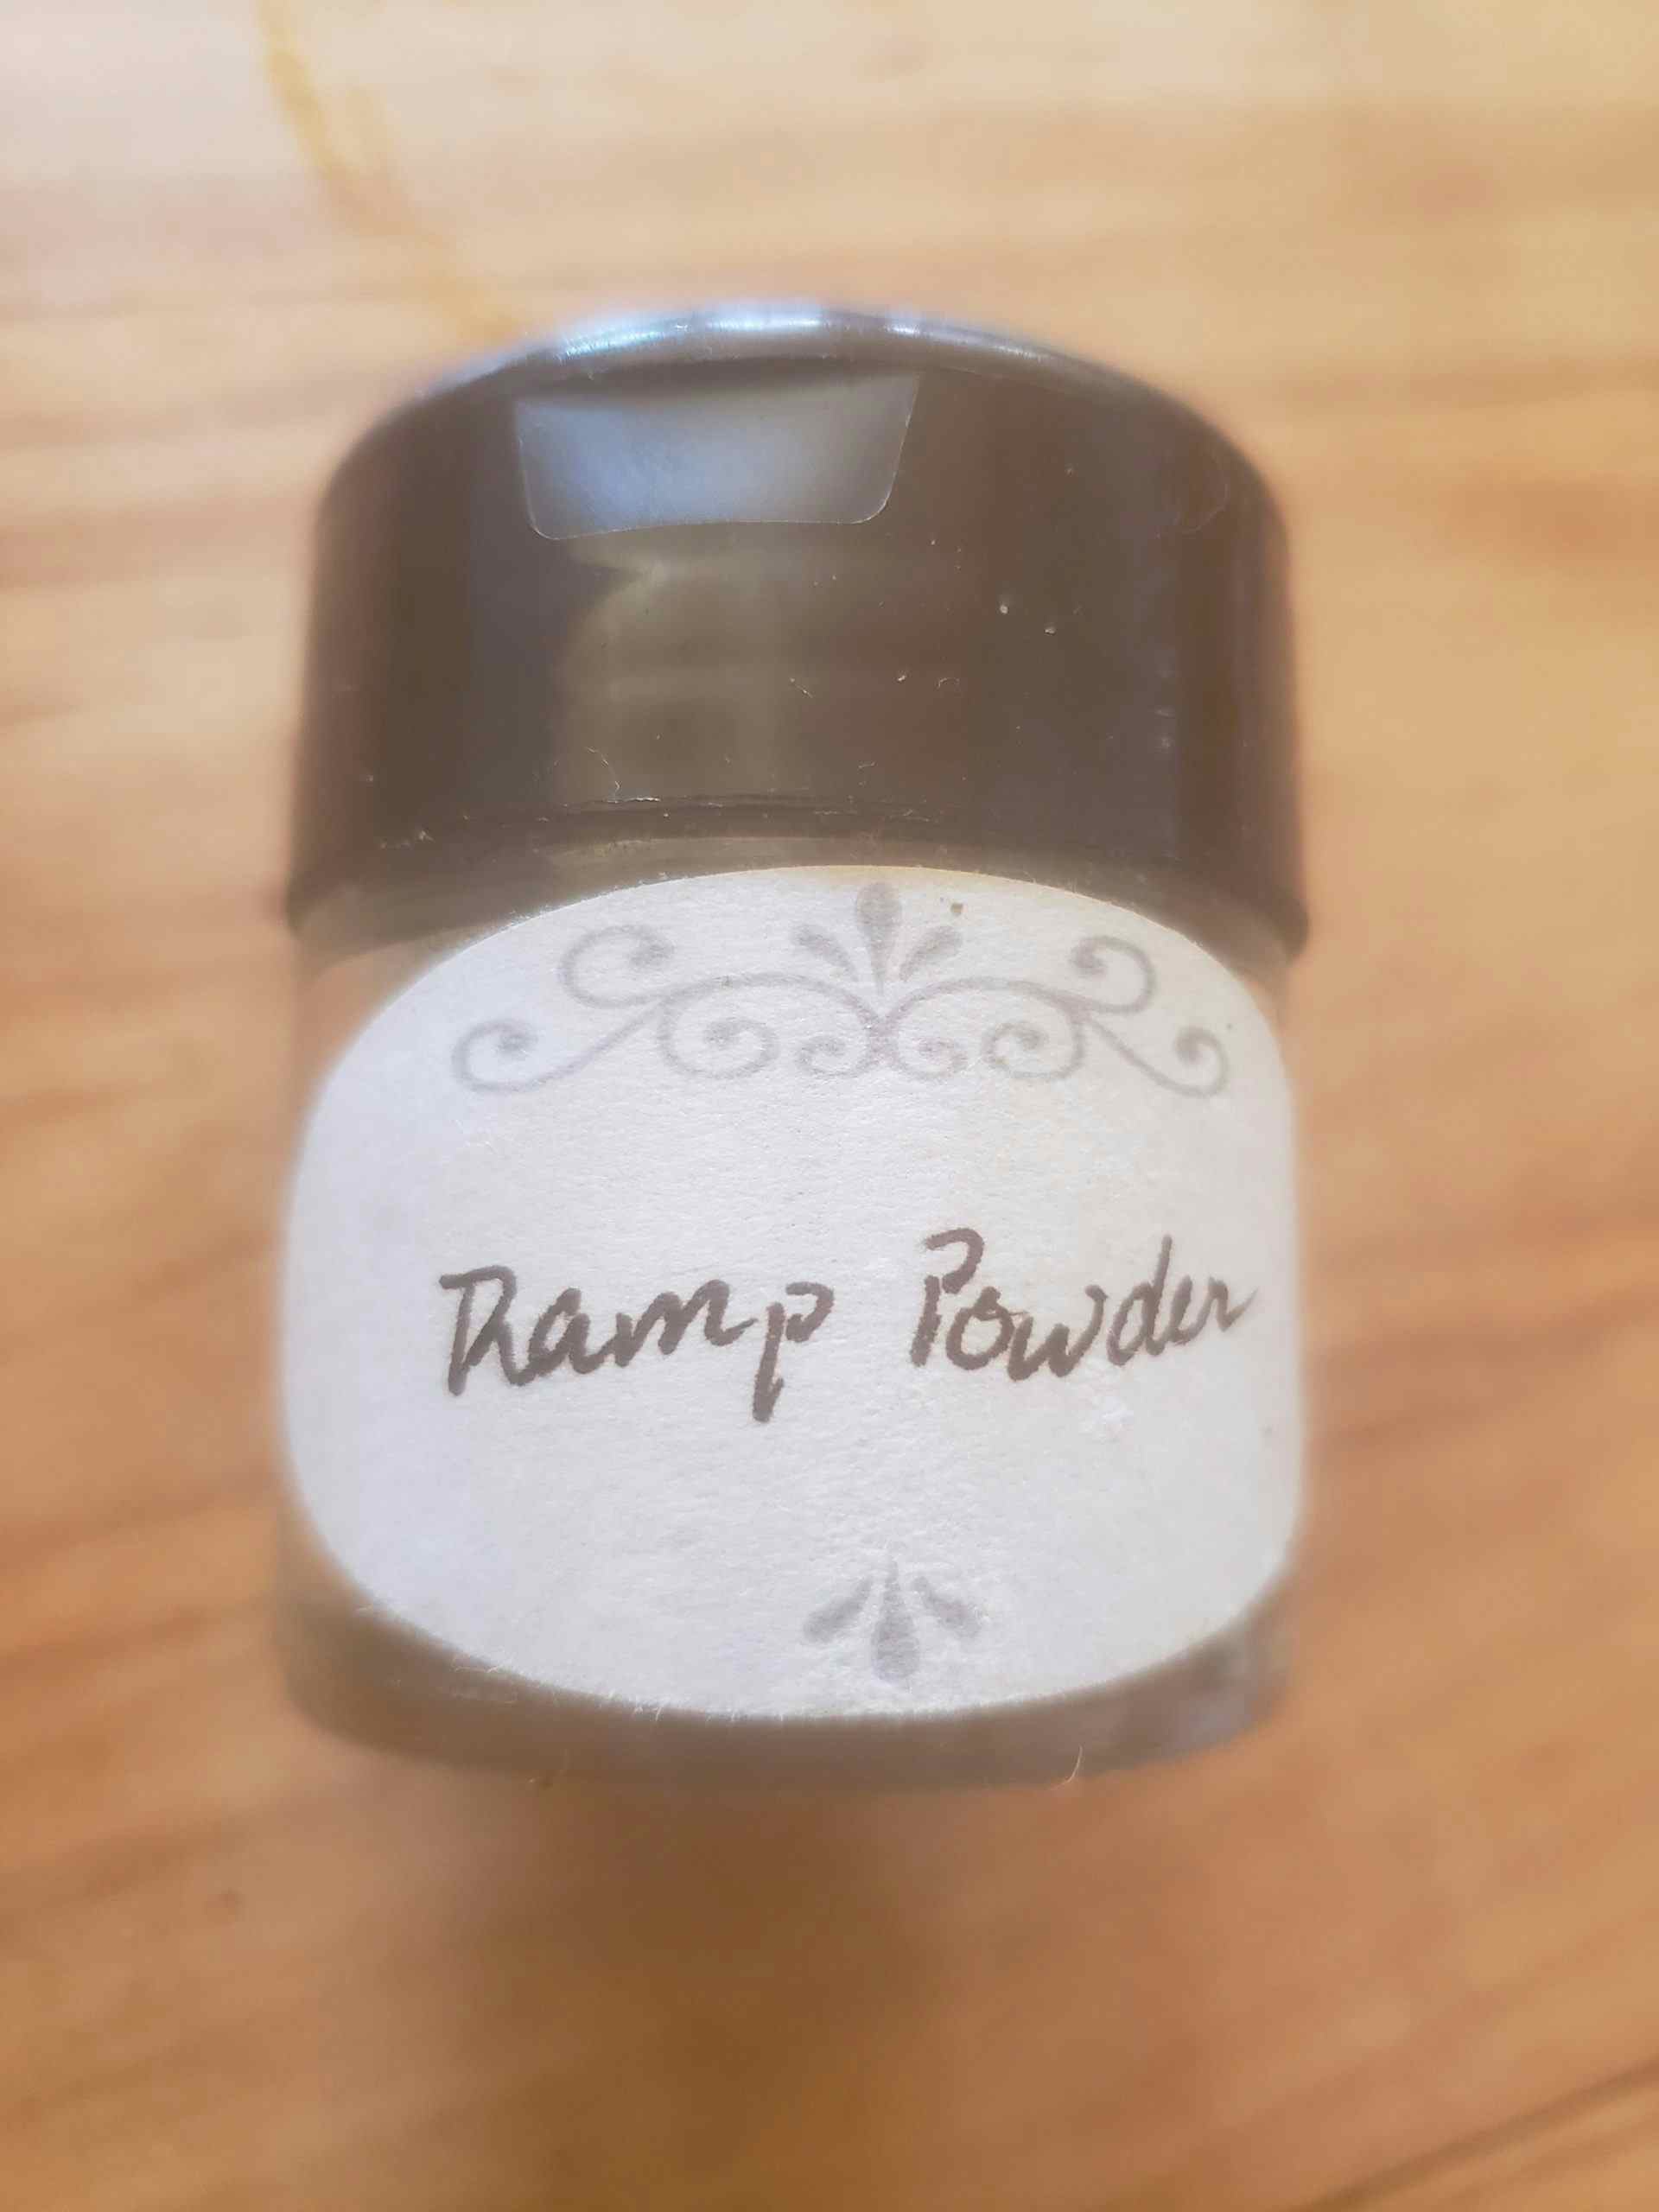 Ramp Powder 1oz glass shaker